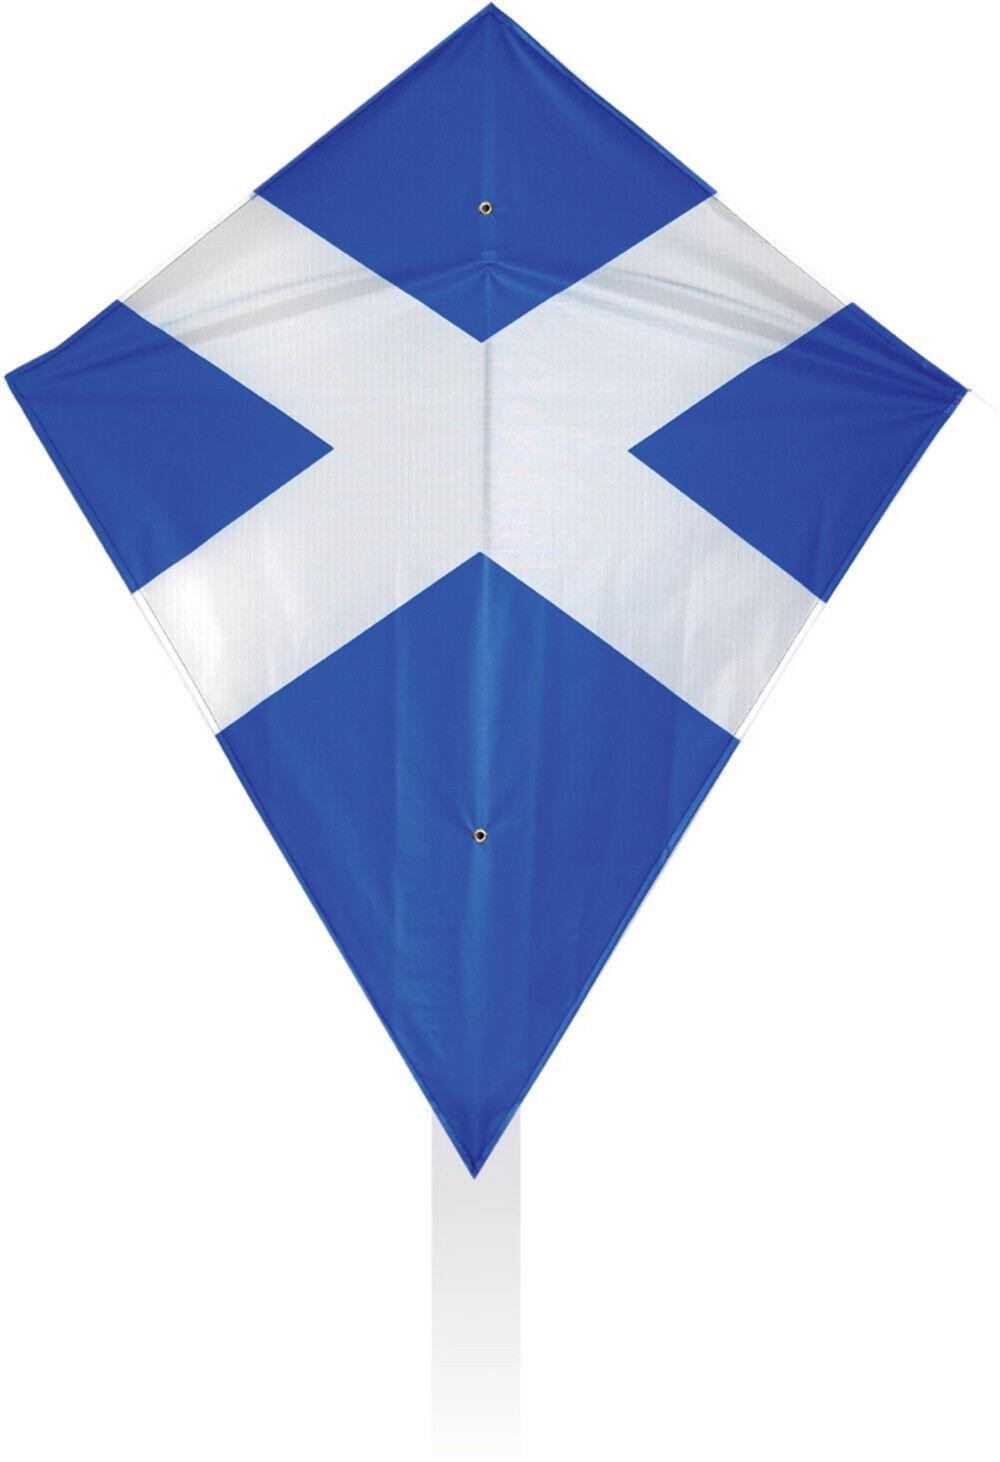 Diamond-shaped kite with Scotland's blue and white Saltire flag.